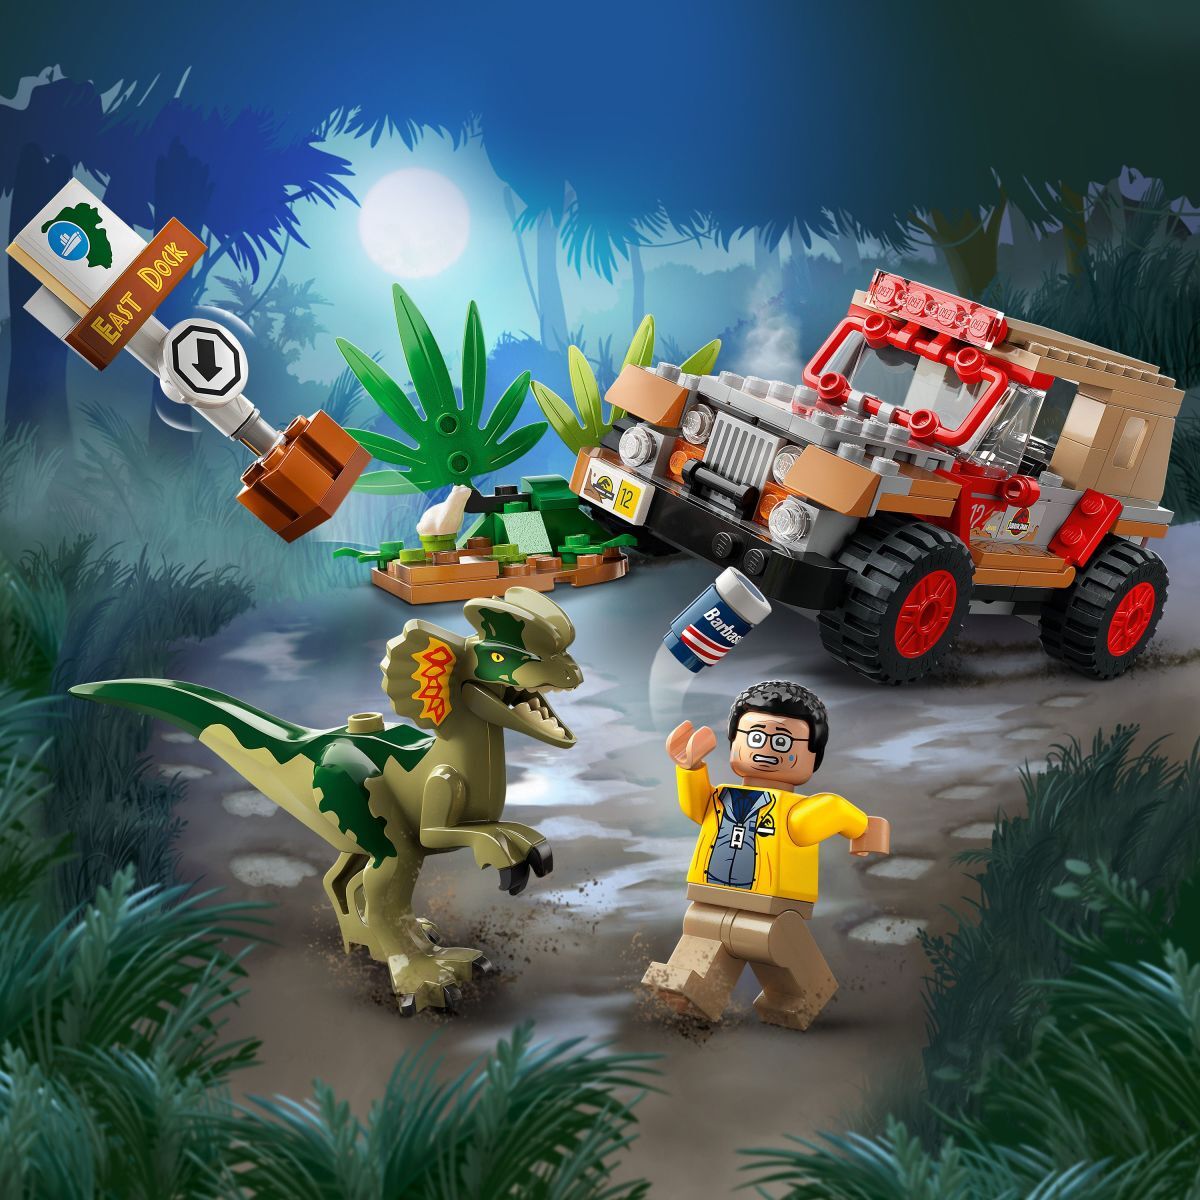 LEGO Jurassic World - Customize, Create Dinosaur Dilophosaurus